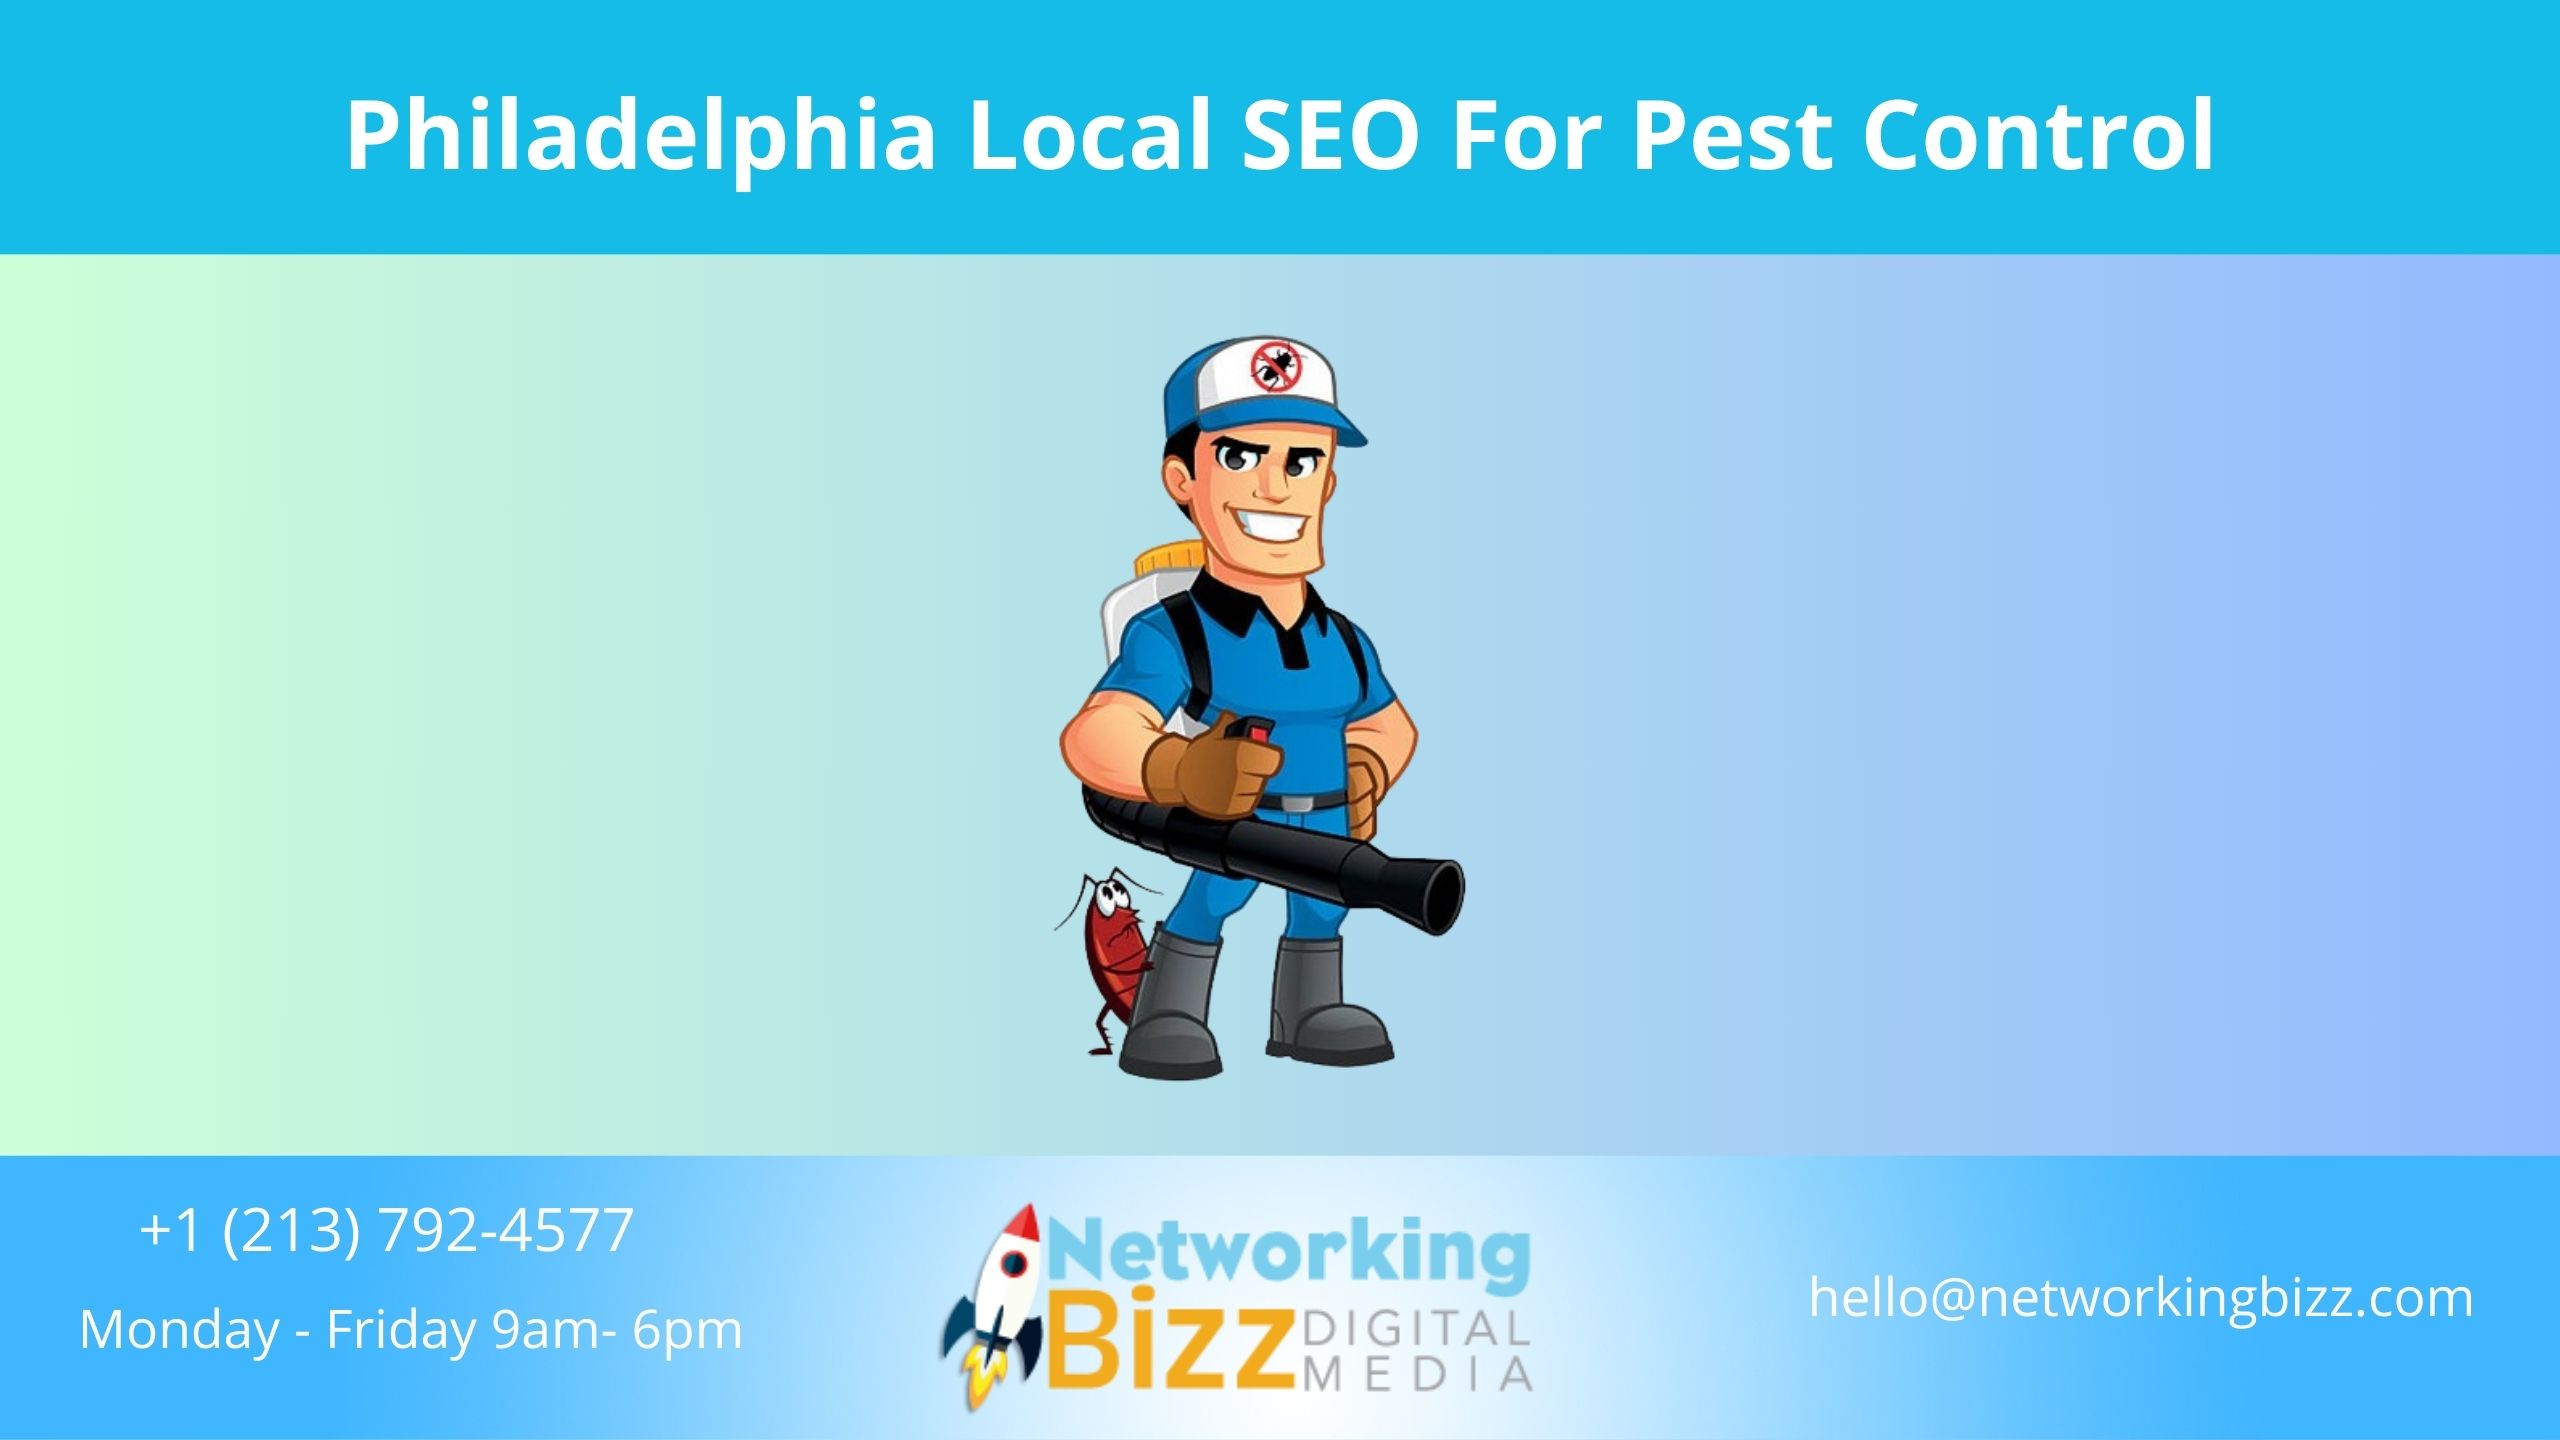 Philadelphia Local SEO For Pest Control